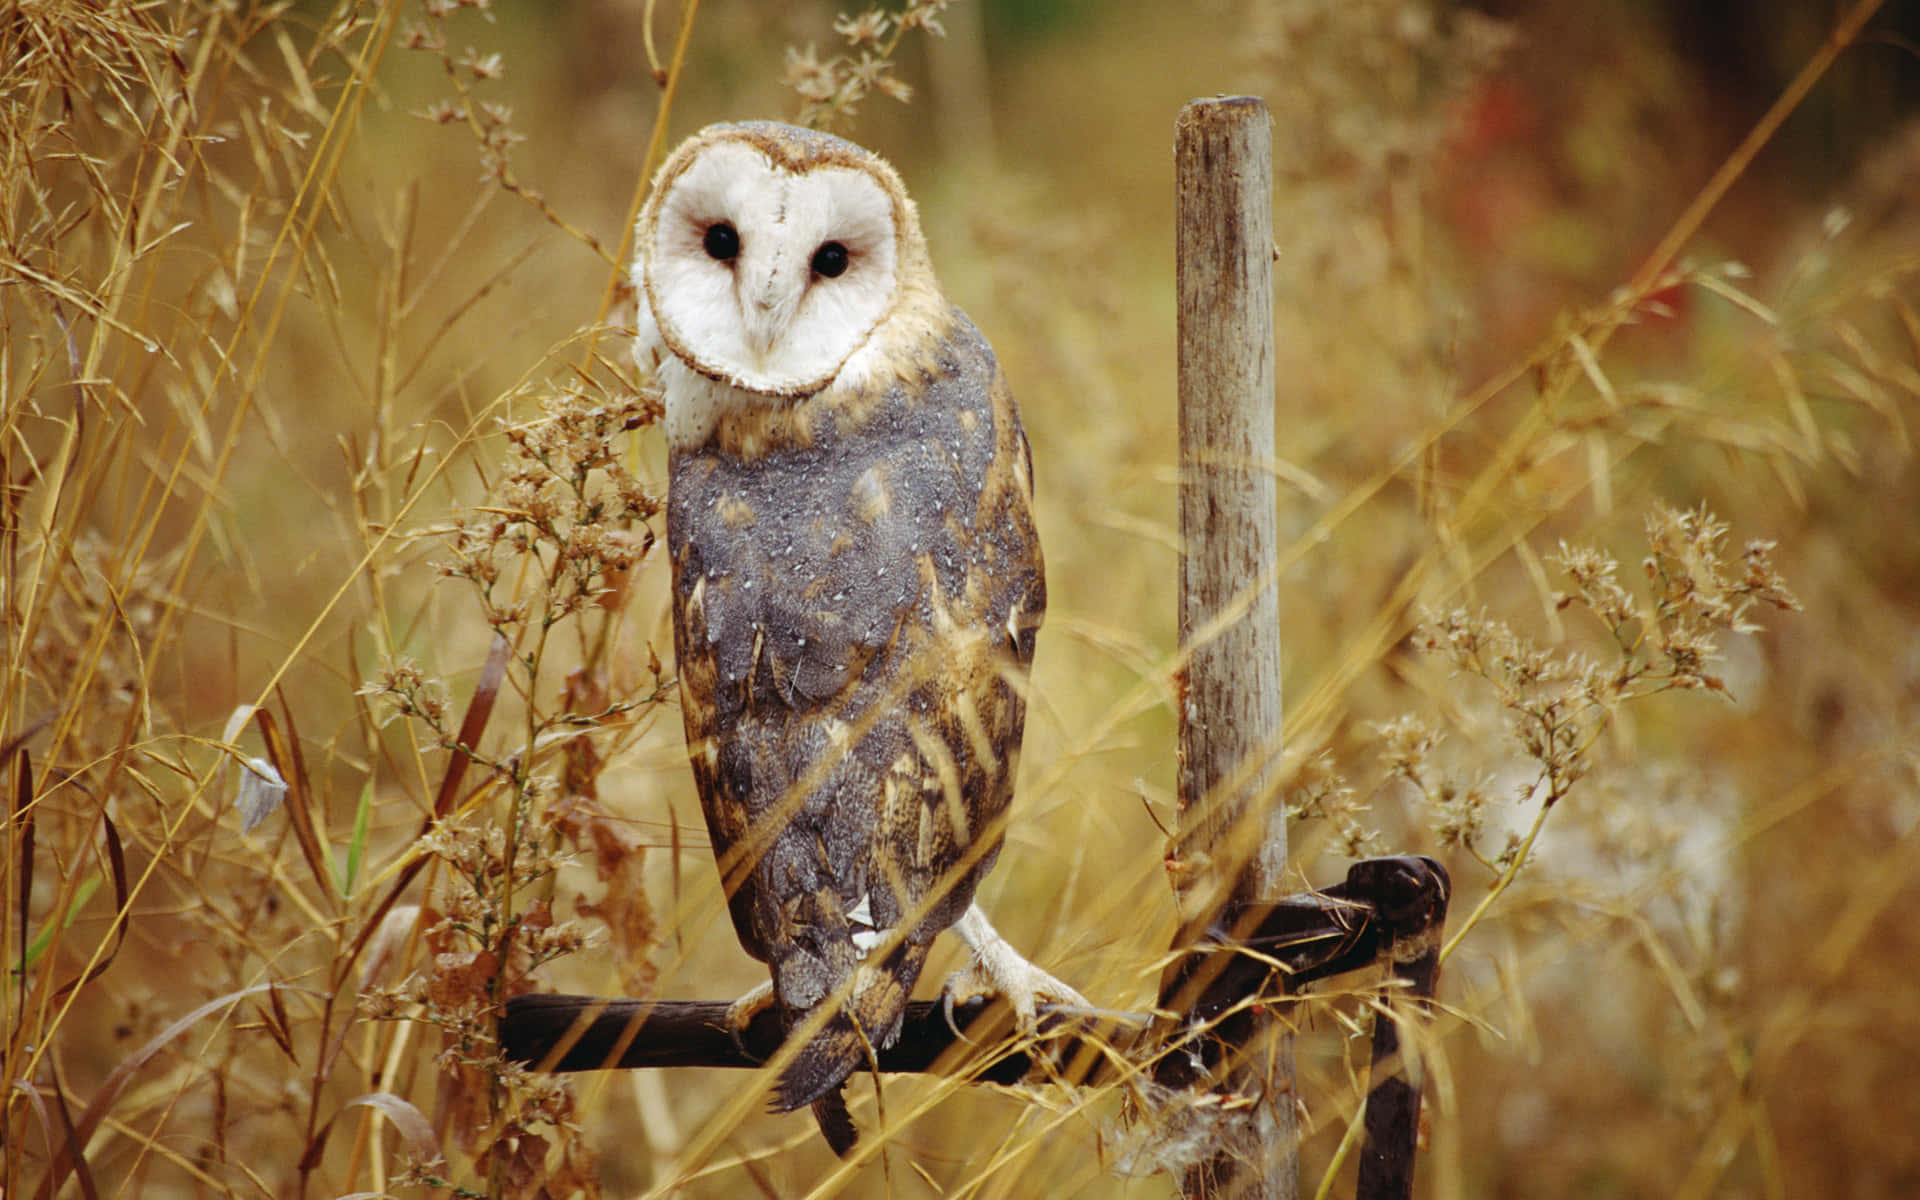 A magnificent barn owl resting in its habitat